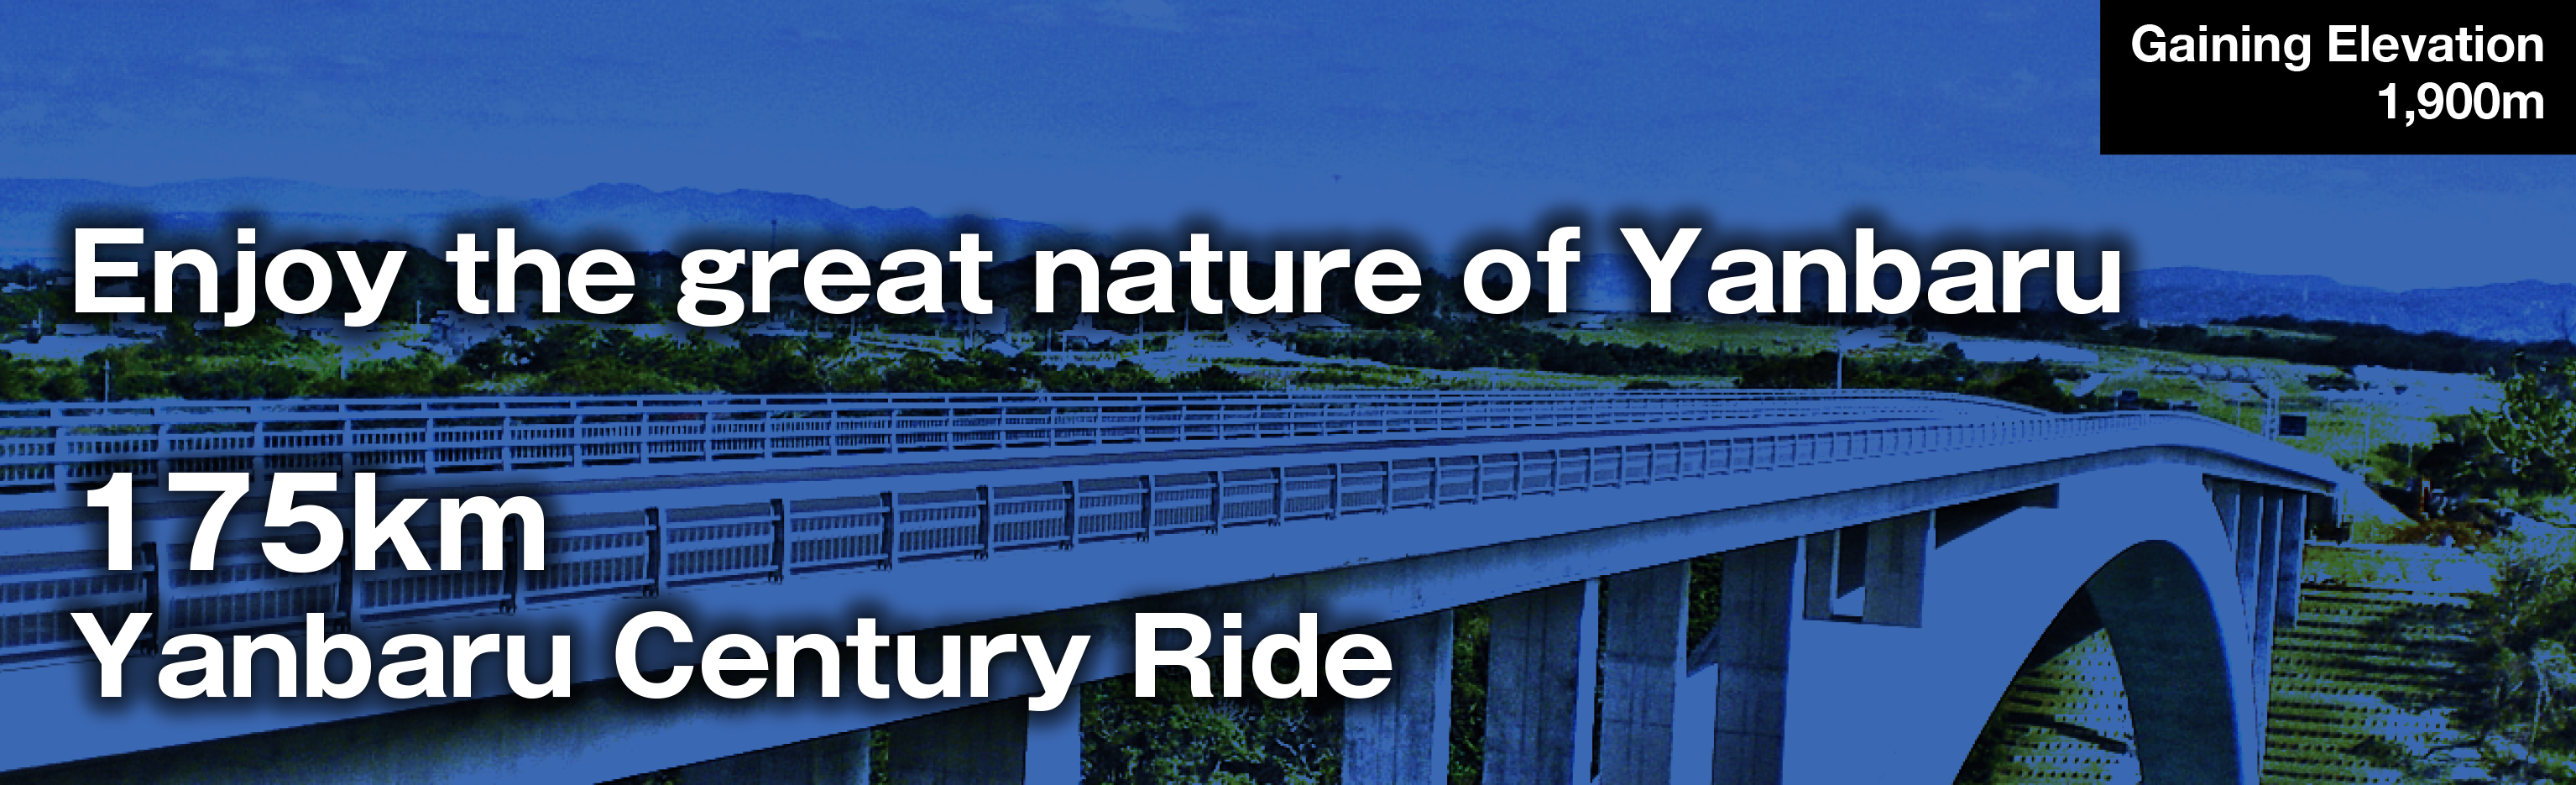 Yanbaru century ride